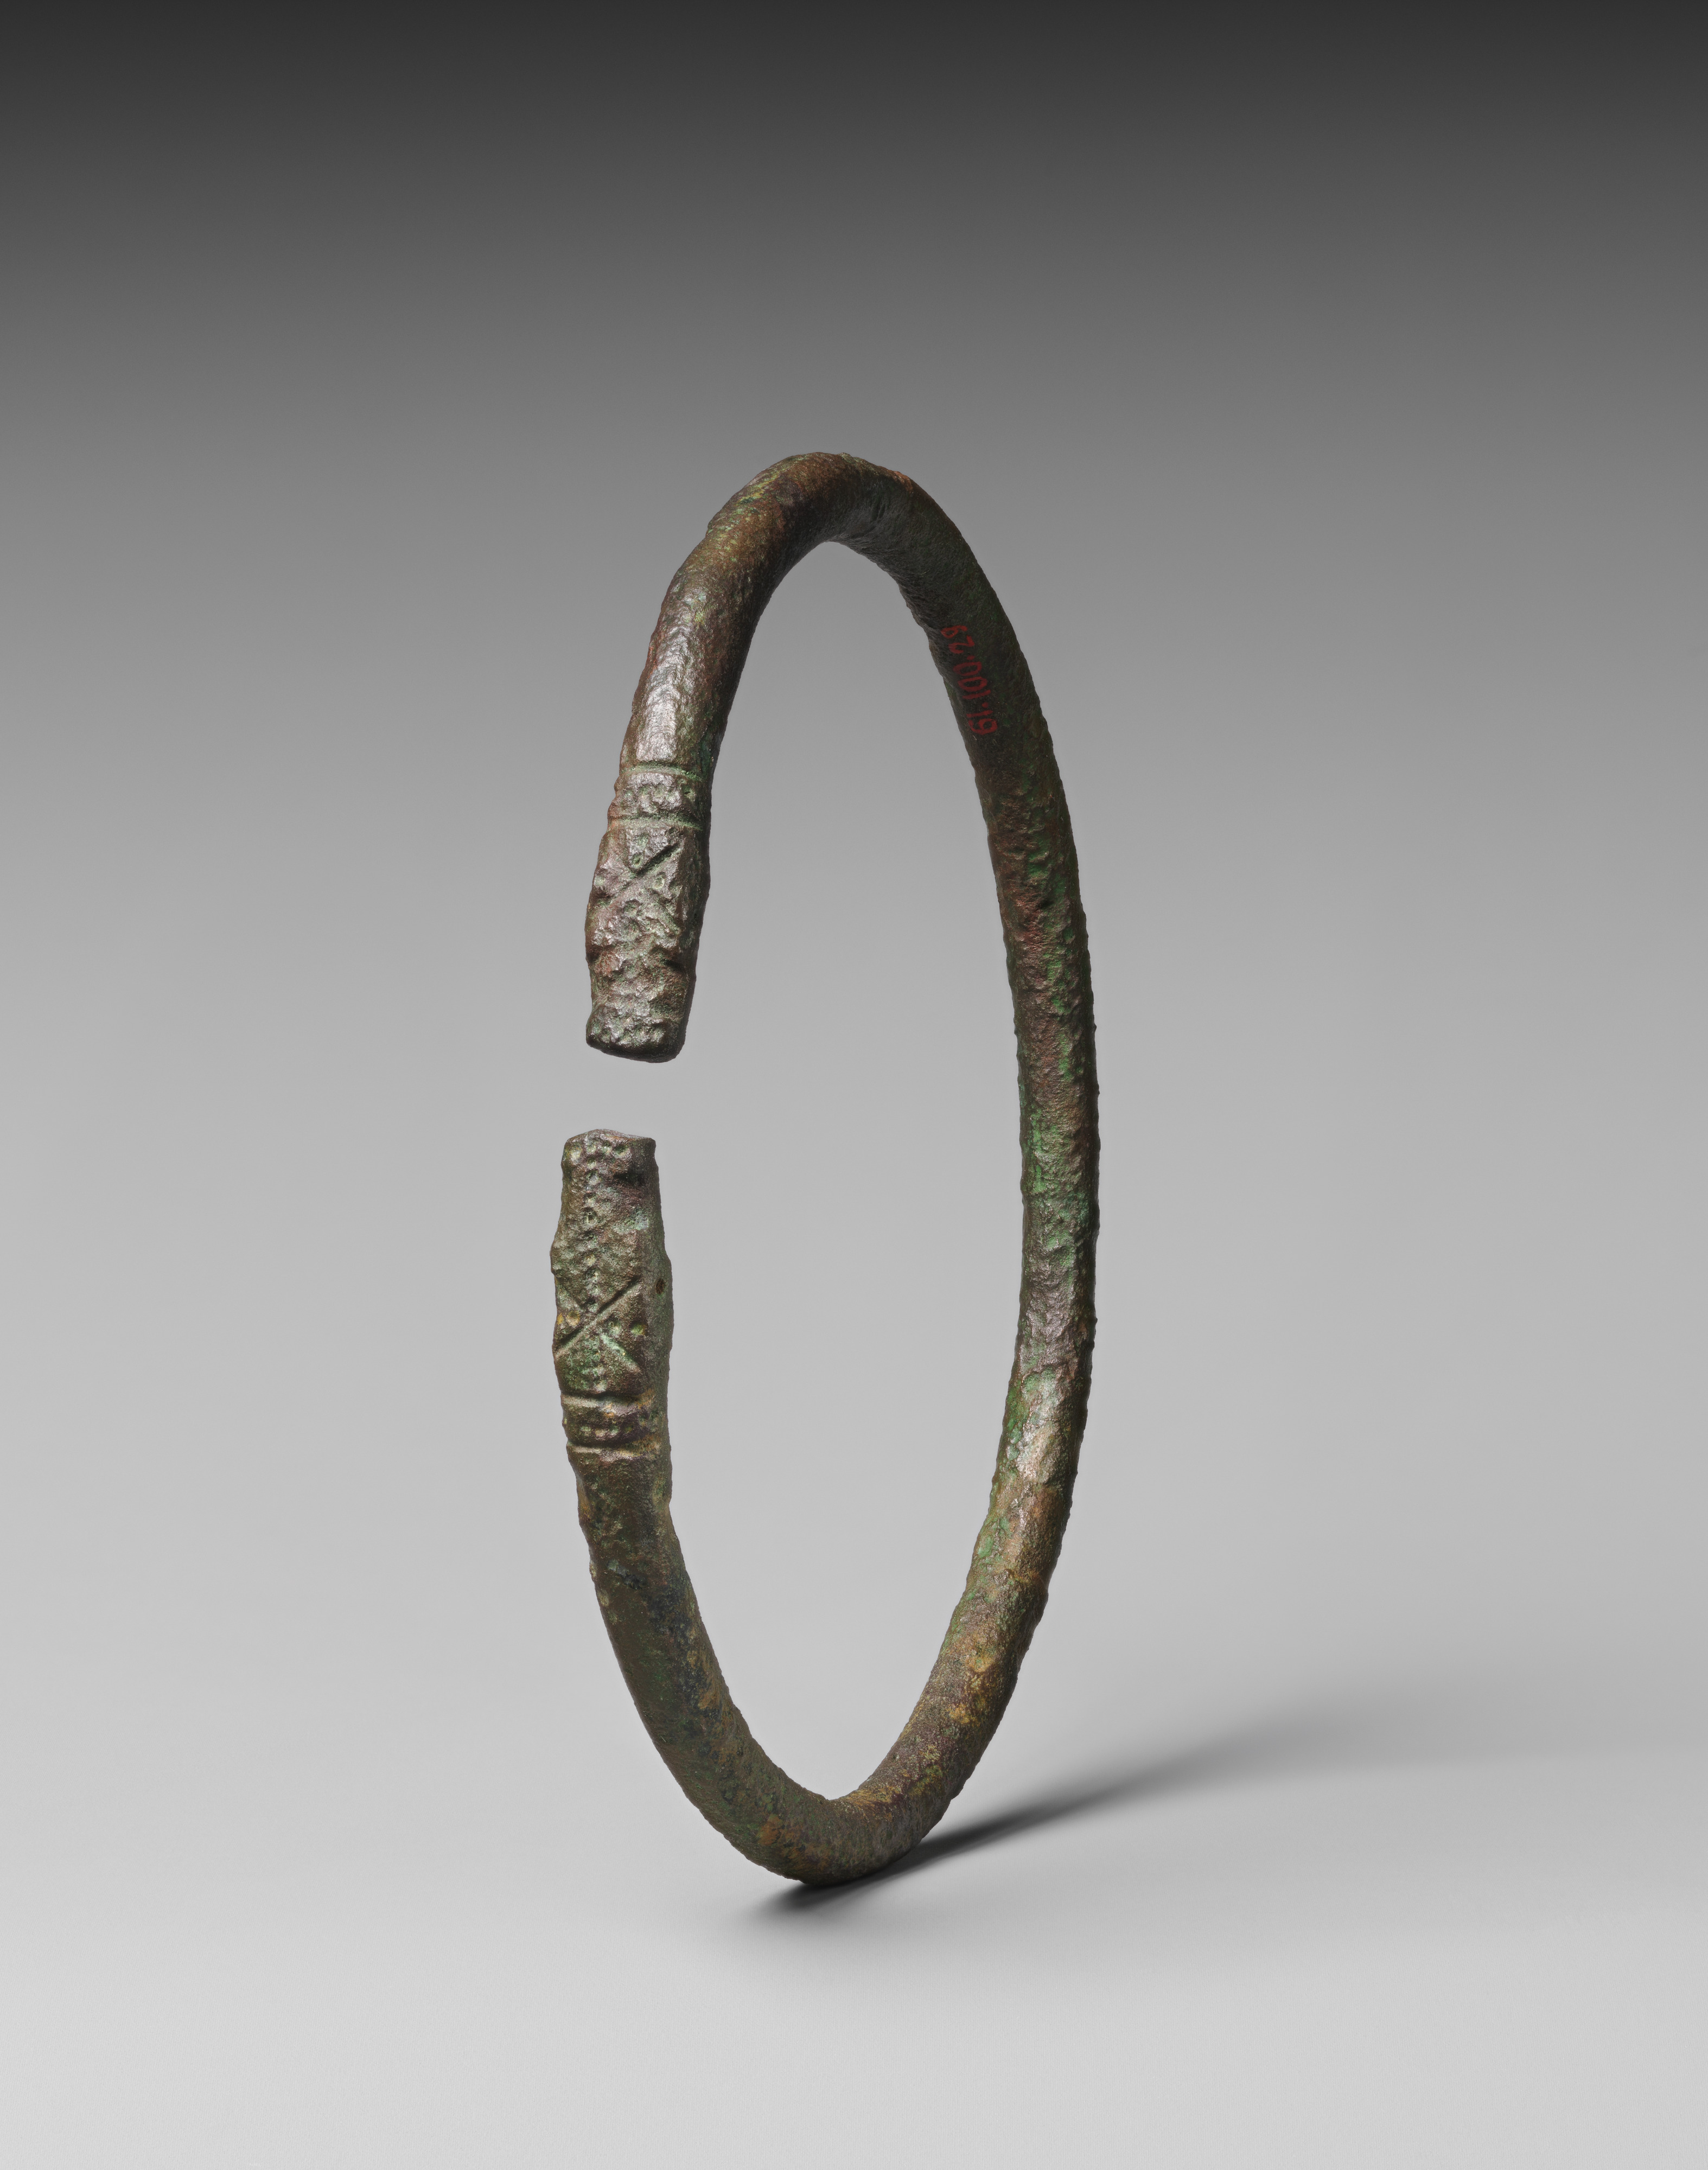 Harness or bridle ornament or fitting (?), Iran, Iron Age II, Date ca. 9th  century B.C., Iran, Hasanlu, Iran, Bronze, 5.39 x 2.56 in. (13.69 x 6.5  cm), Metalwork-Equestria - Album alb4893939